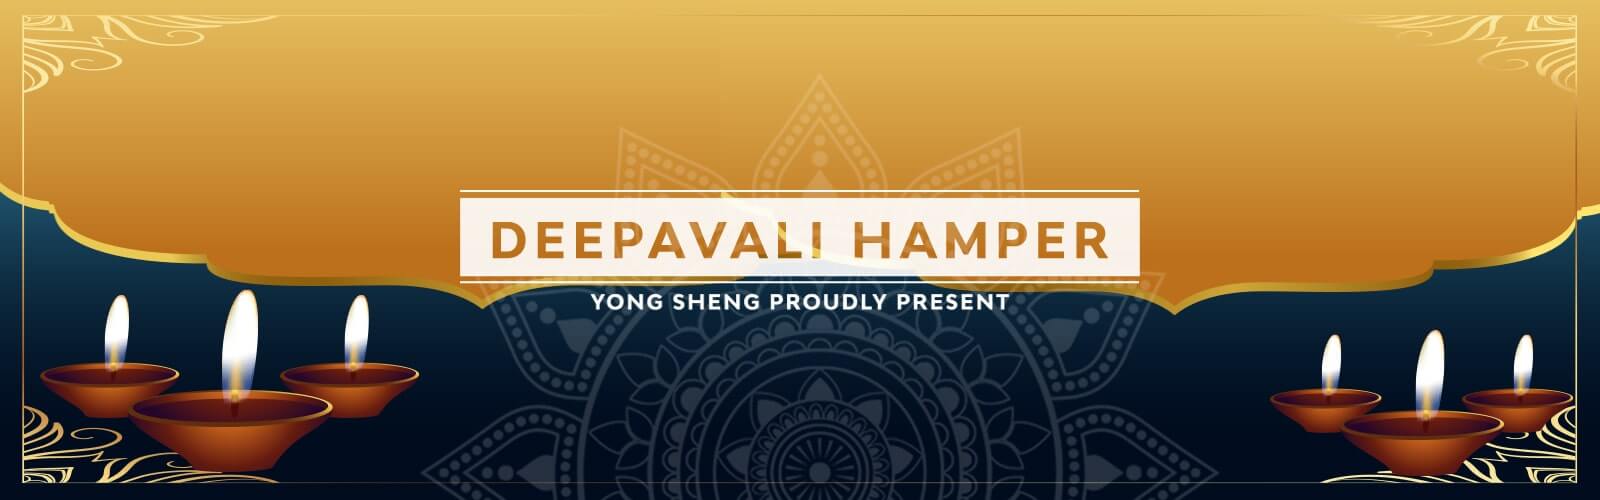 Deepavali Hamper